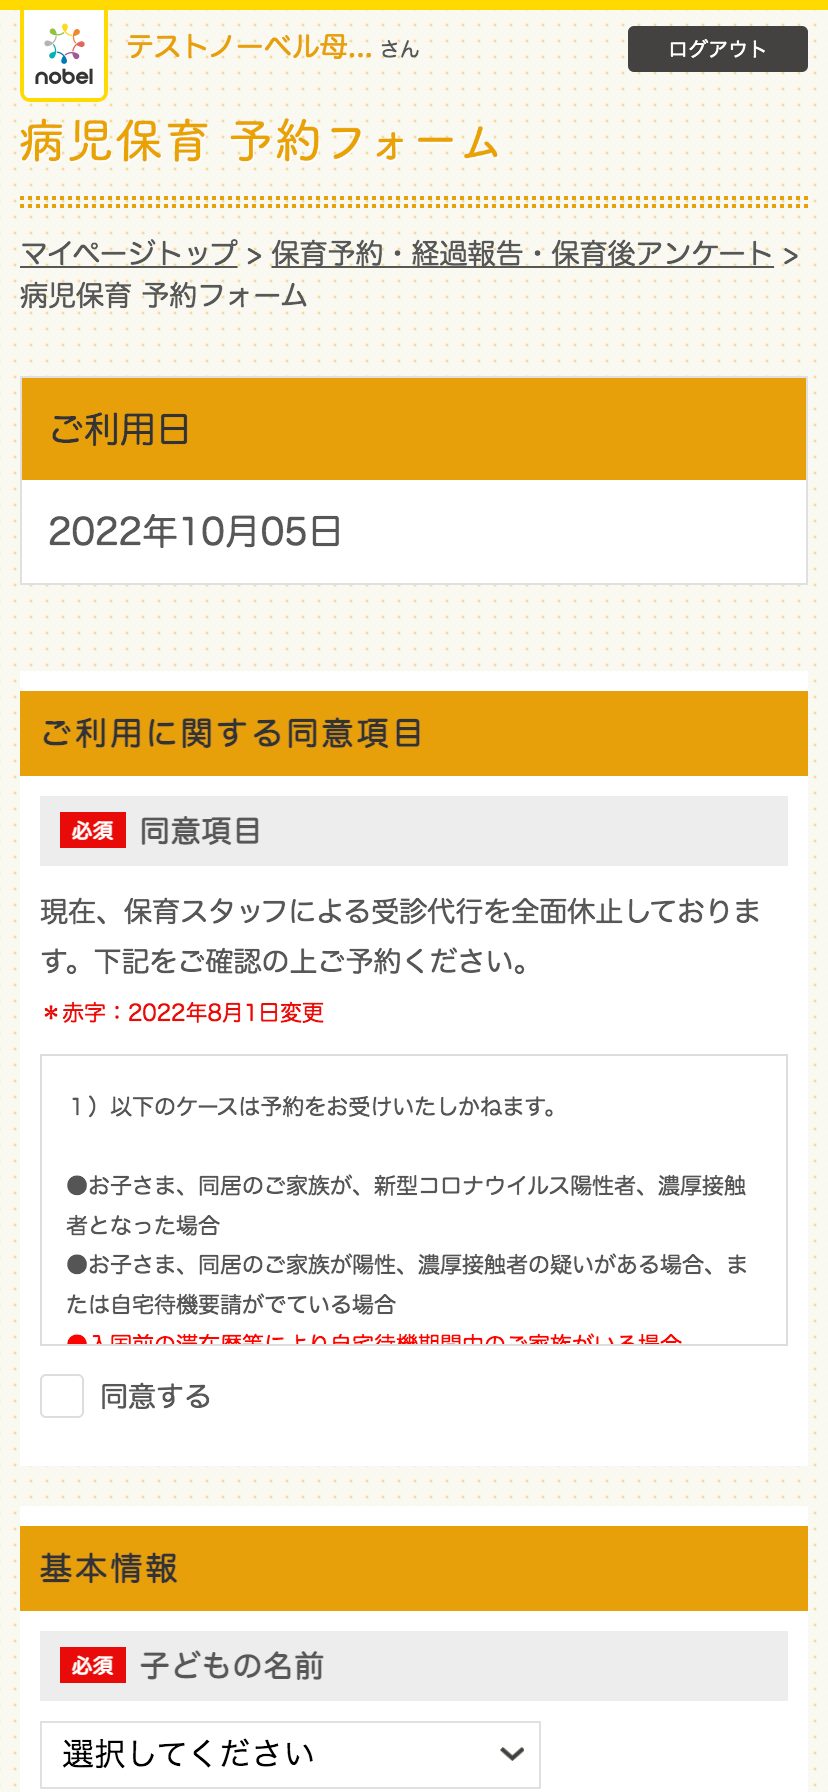 byojihoiku.nponobel.jp_mypage_hoiku_reservation(iPhone XR)